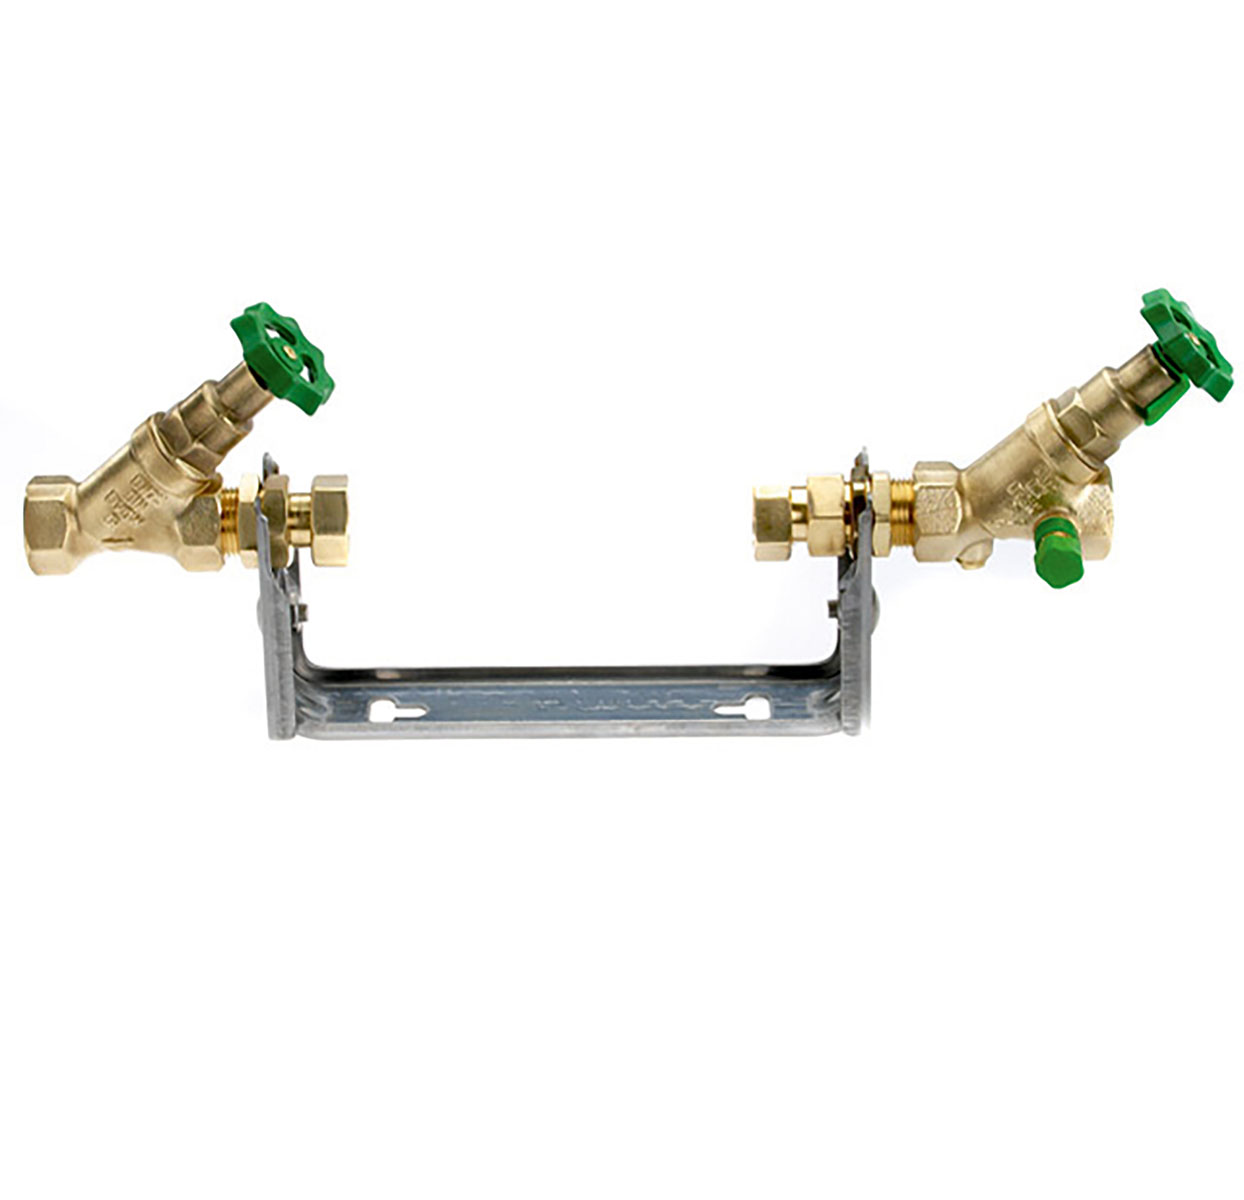 5100250 - Water meter Connection kit bracket adjustable, horizontal installation